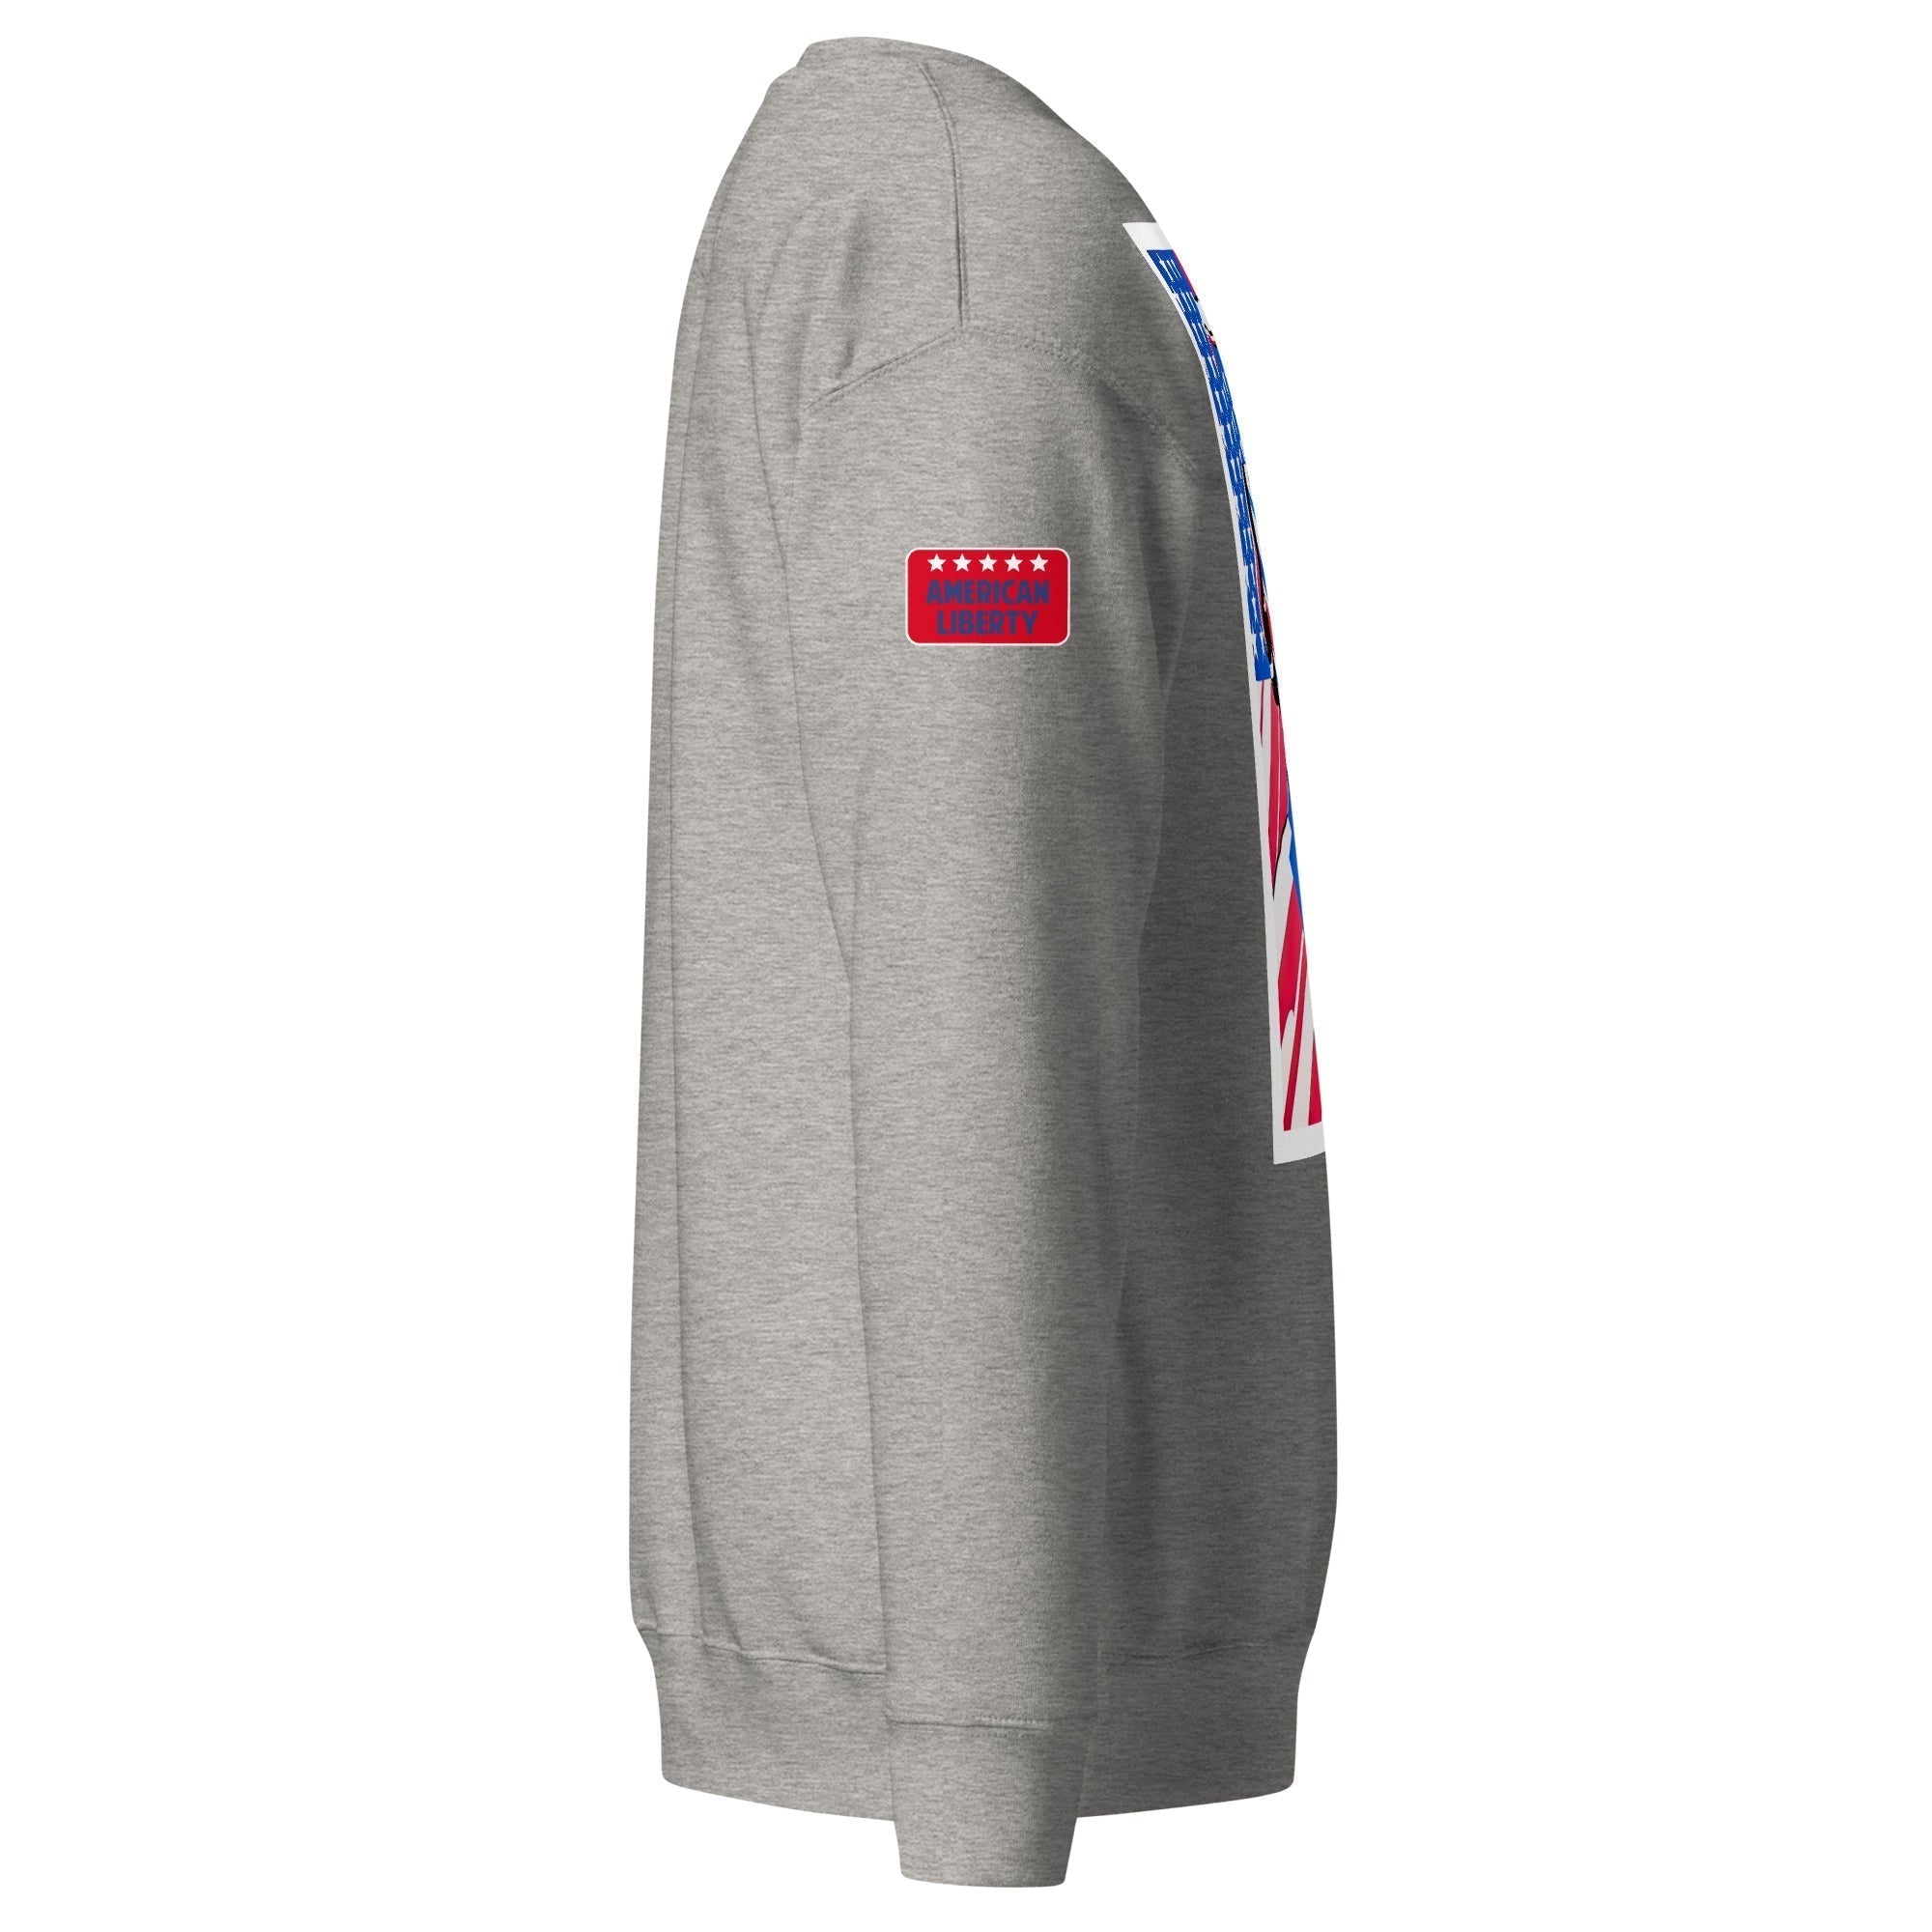 Unisex Premium Sweatshirt - American Liberty Series v.29 - GRAPHIC T-SHIRTS